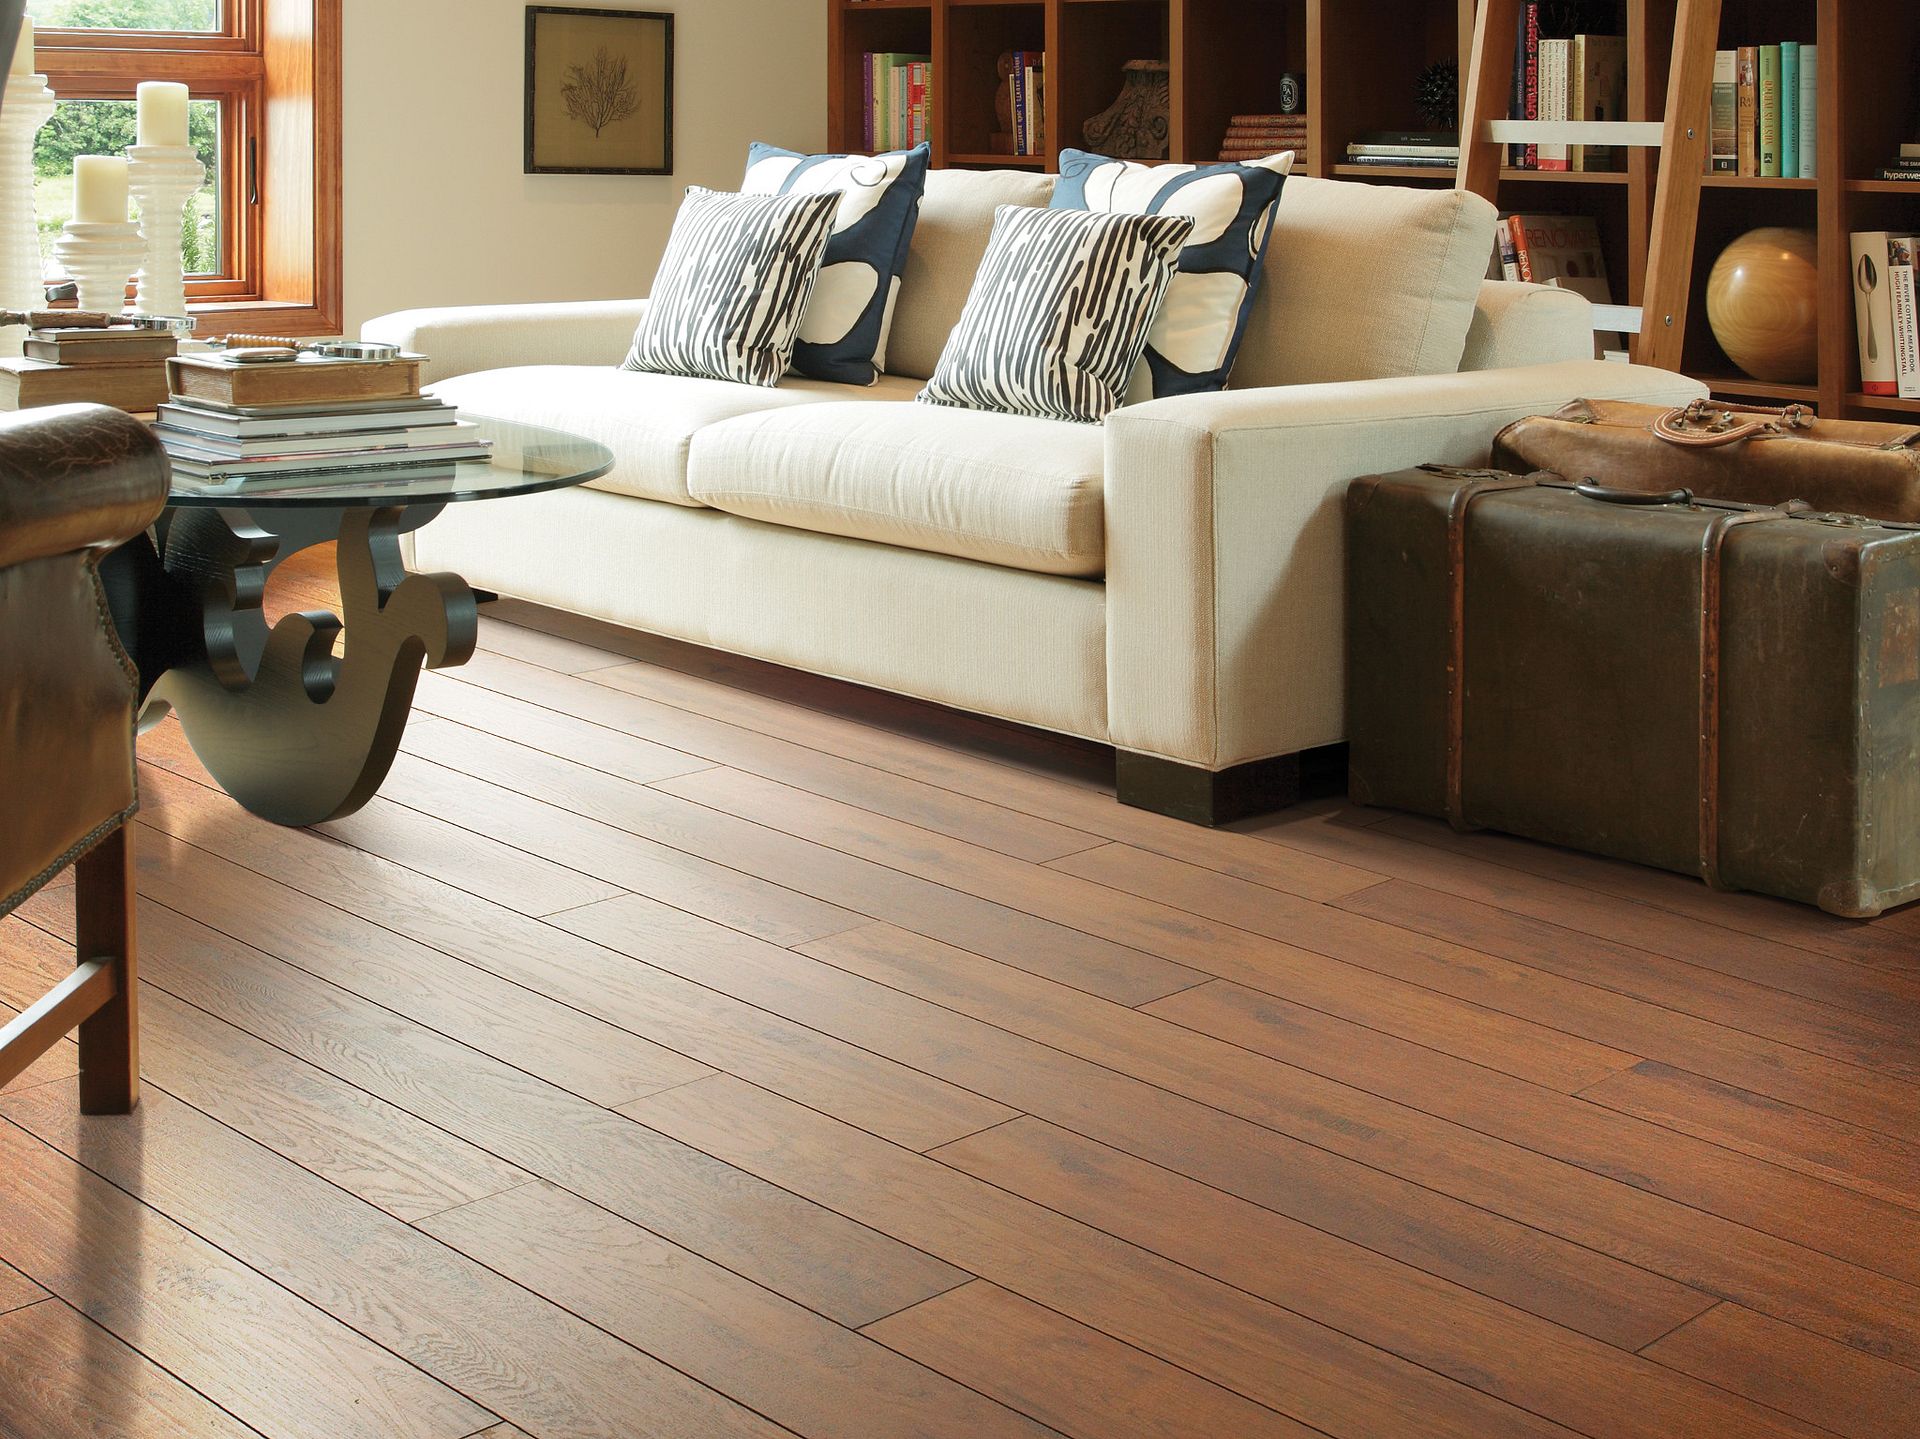 How To Clean Wood Laminate Flooring, How To Clean Pergo Hardwood Floors